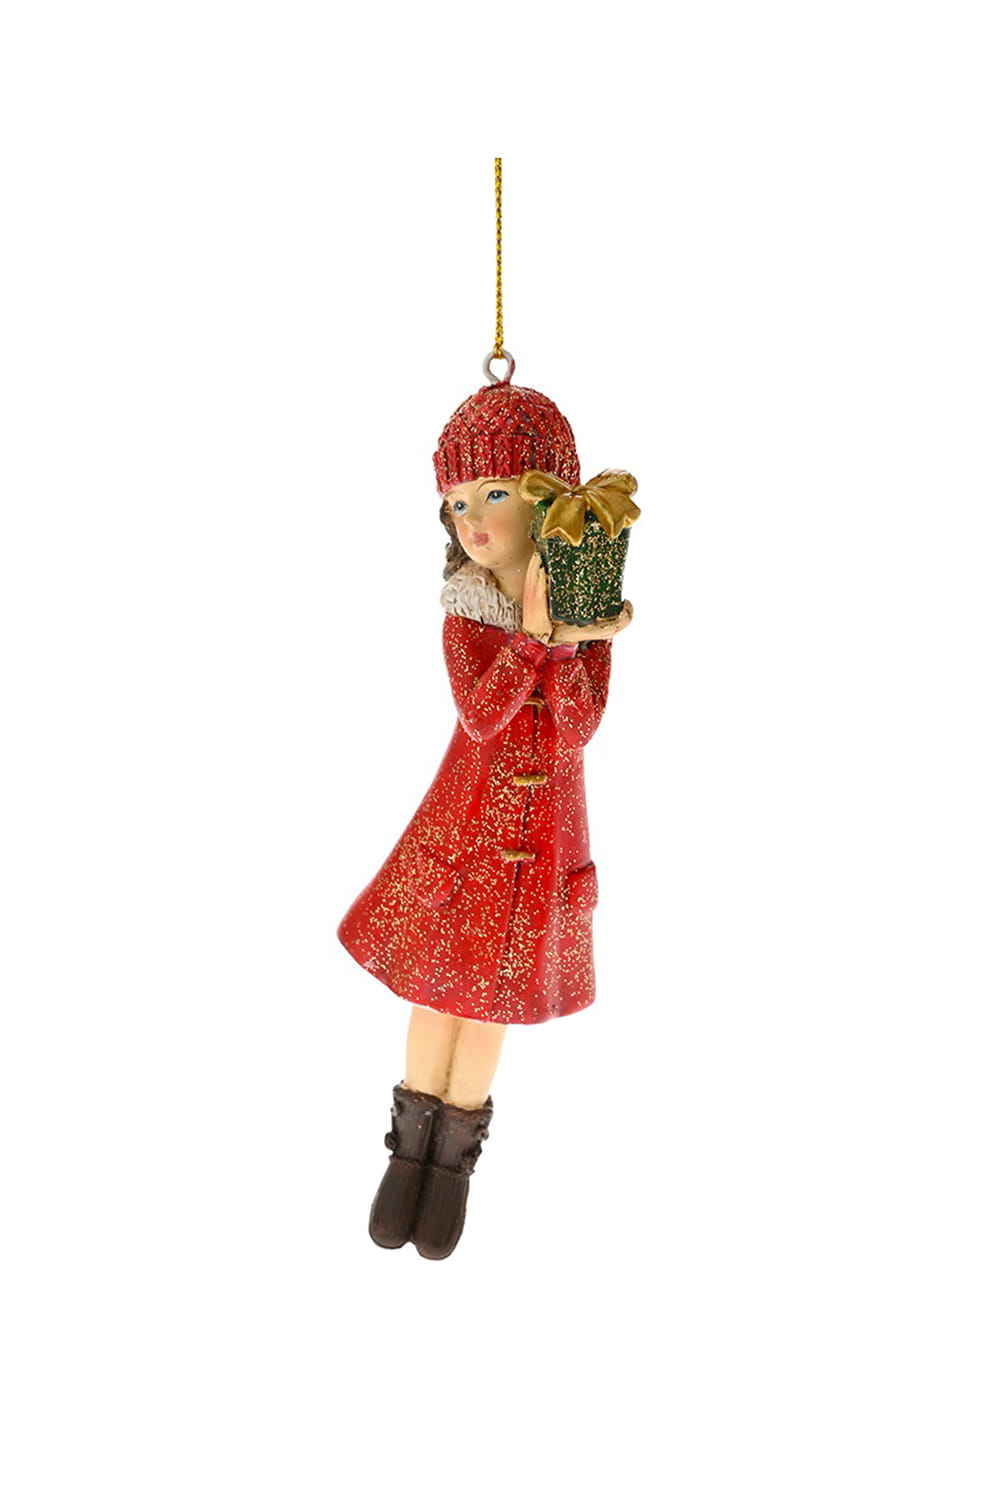 Athome Pavloudakis - Χριστουγεννιάτικο κόκκινο polyresin στολίδι κορίτσι με δώρο (13 cm)